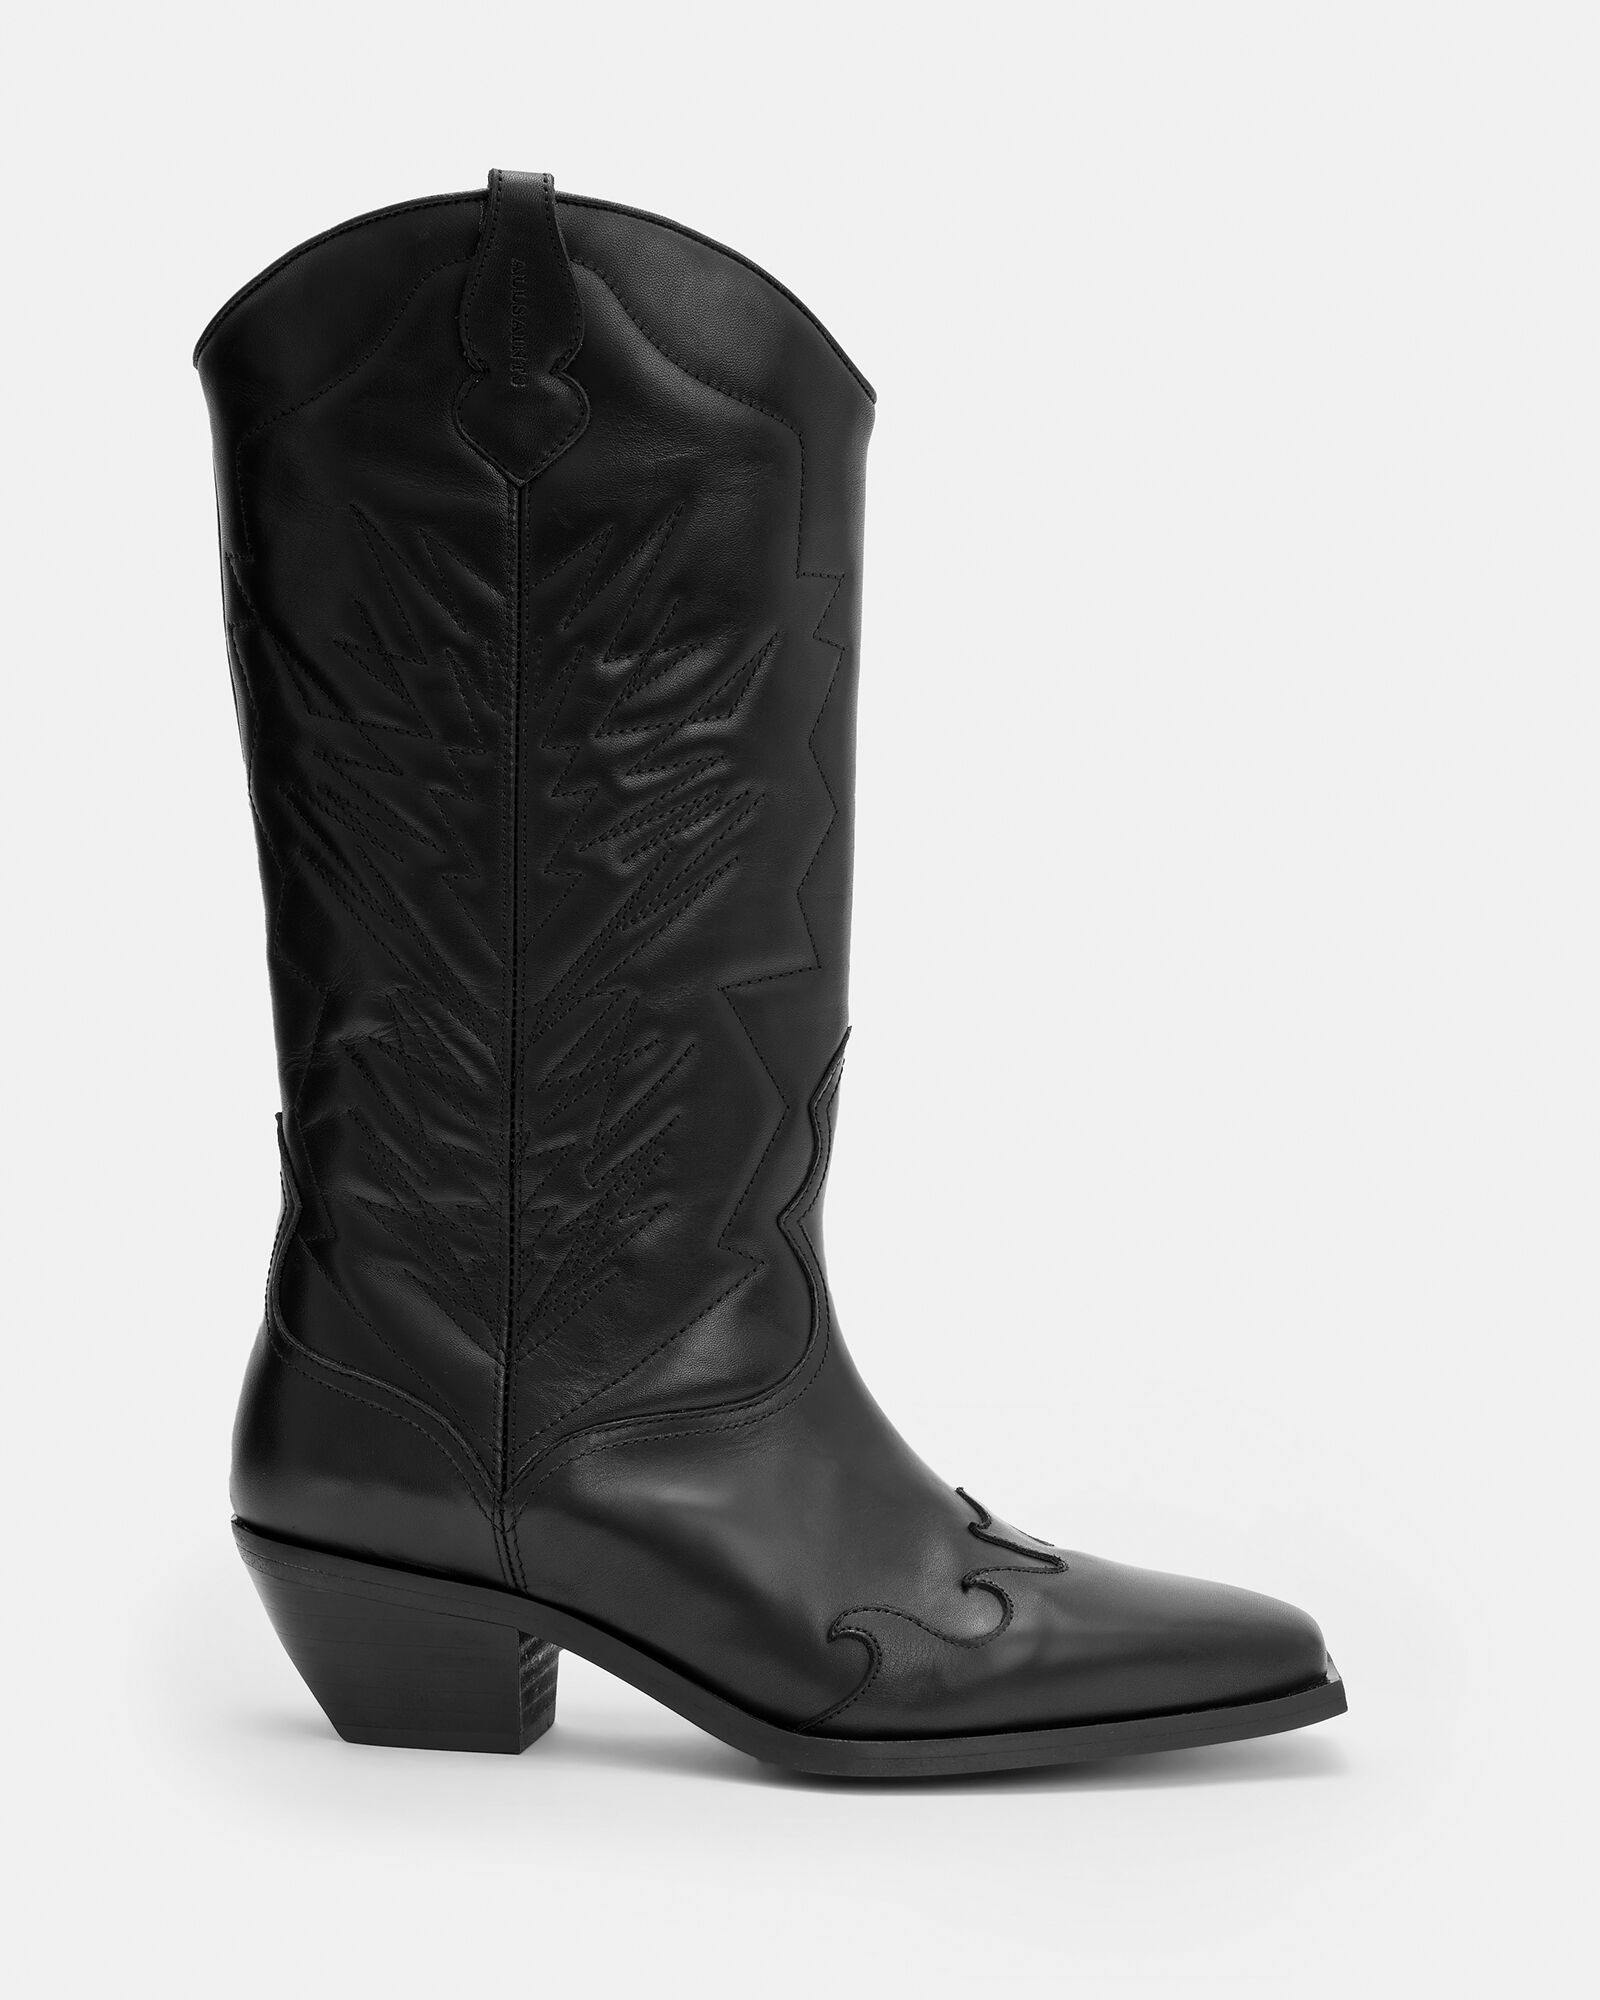 Kacey Leather Cowboy Boots Black | ALLSAINTS